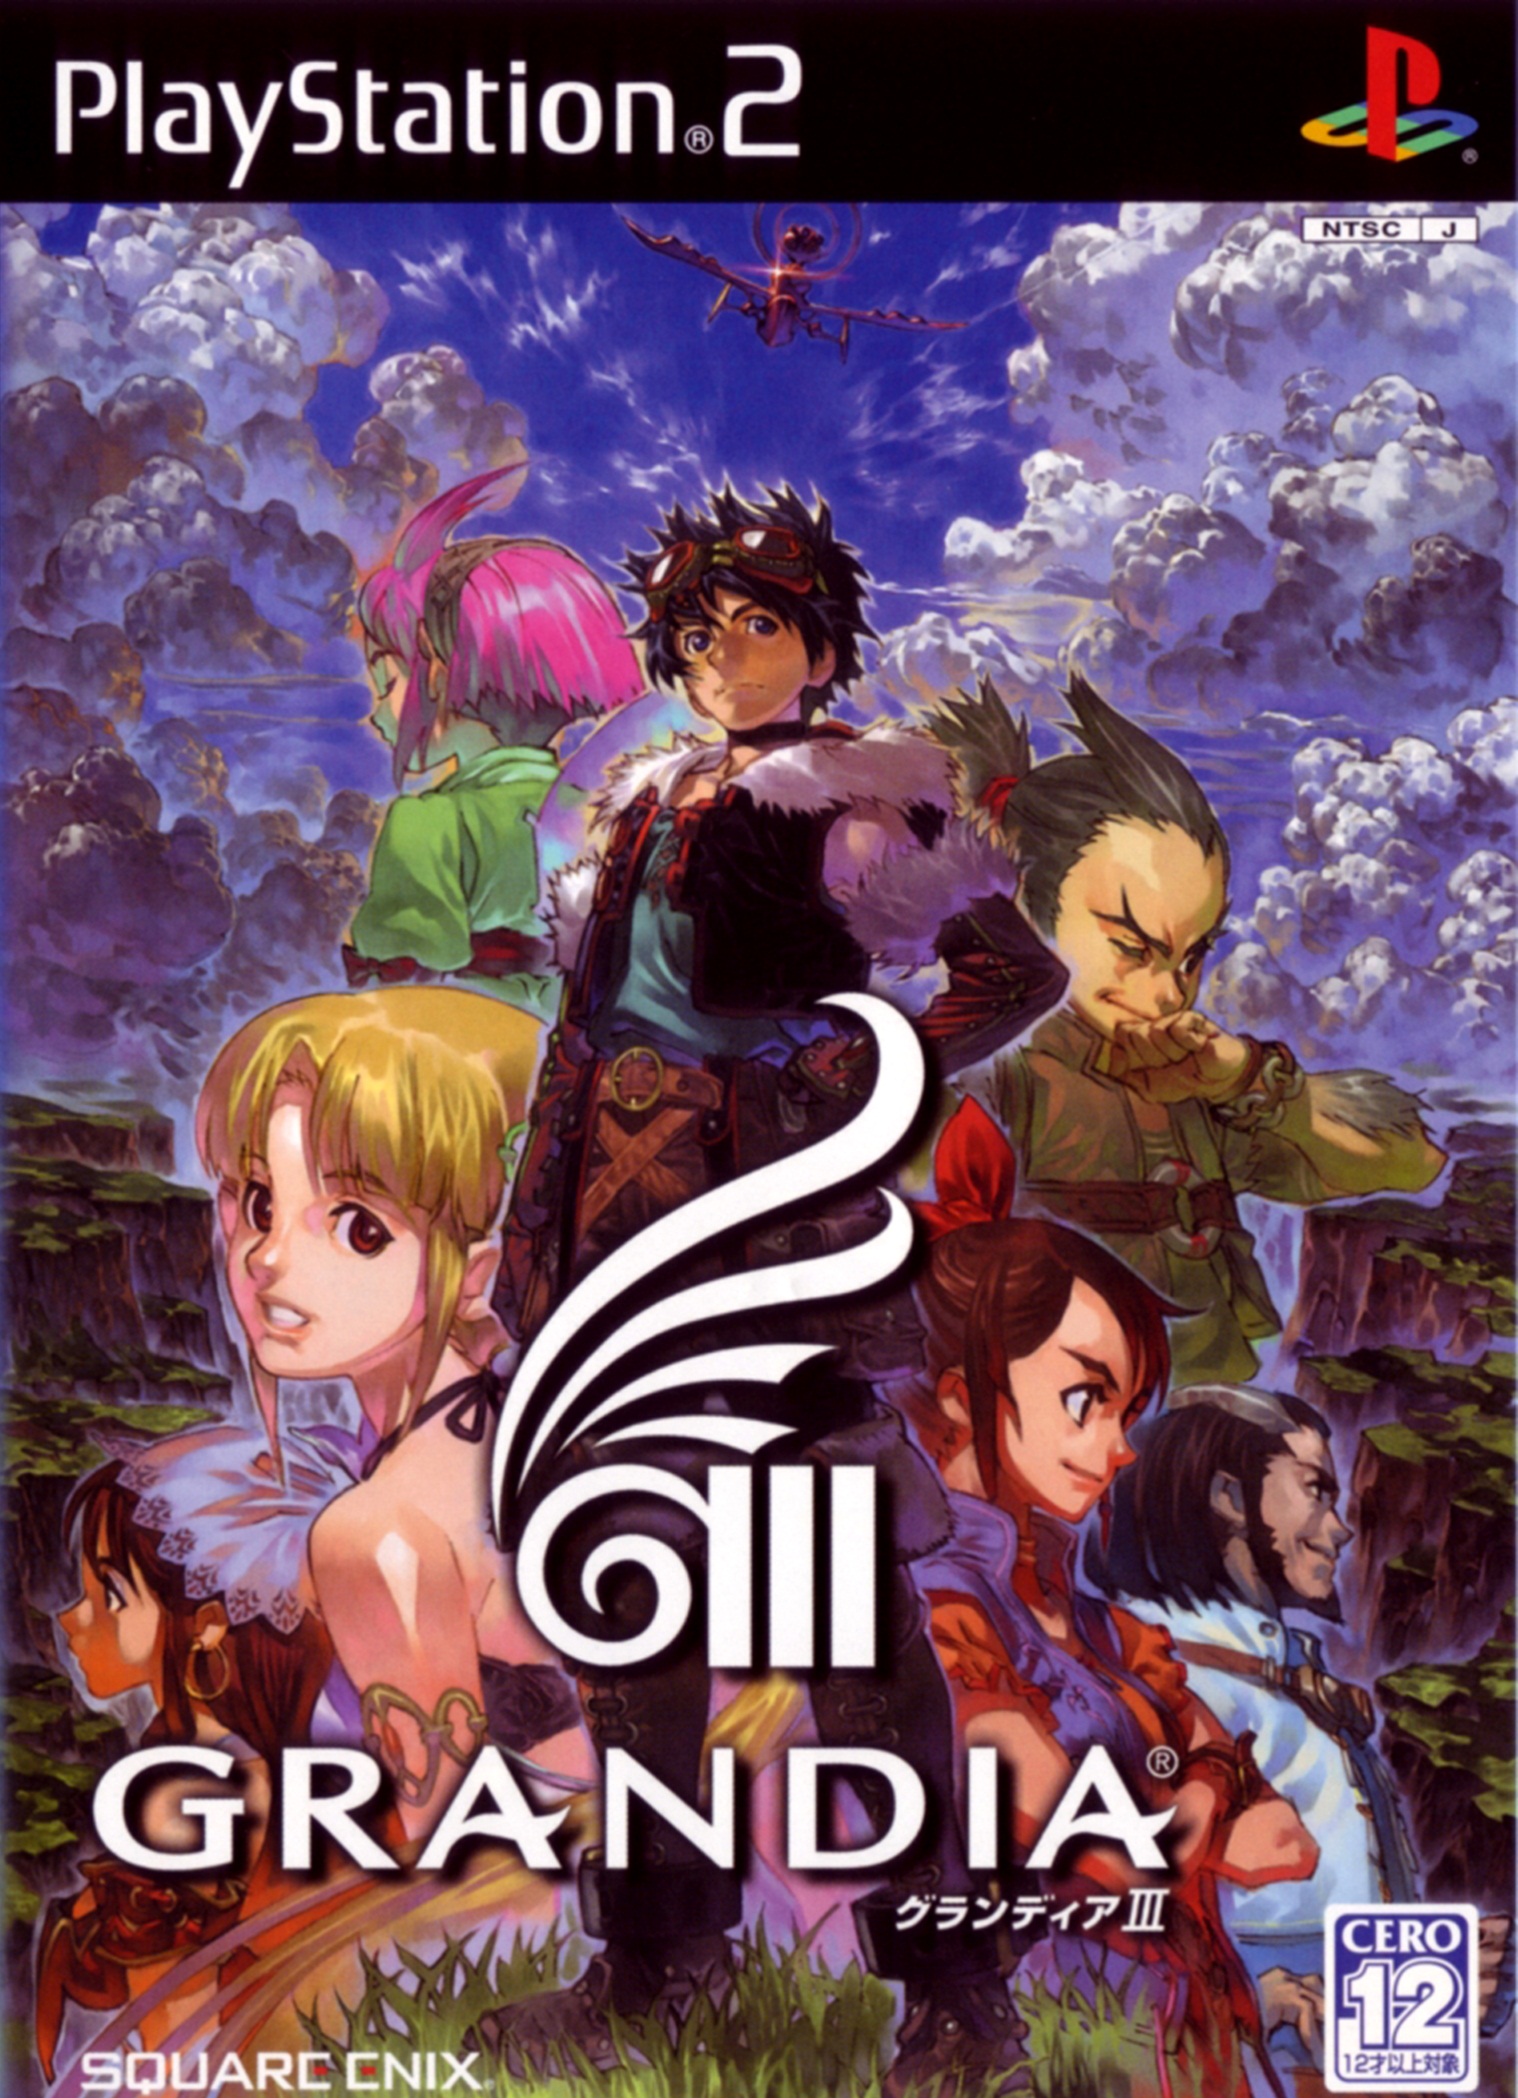 Grandia III | Grandia Wiki | Fandom